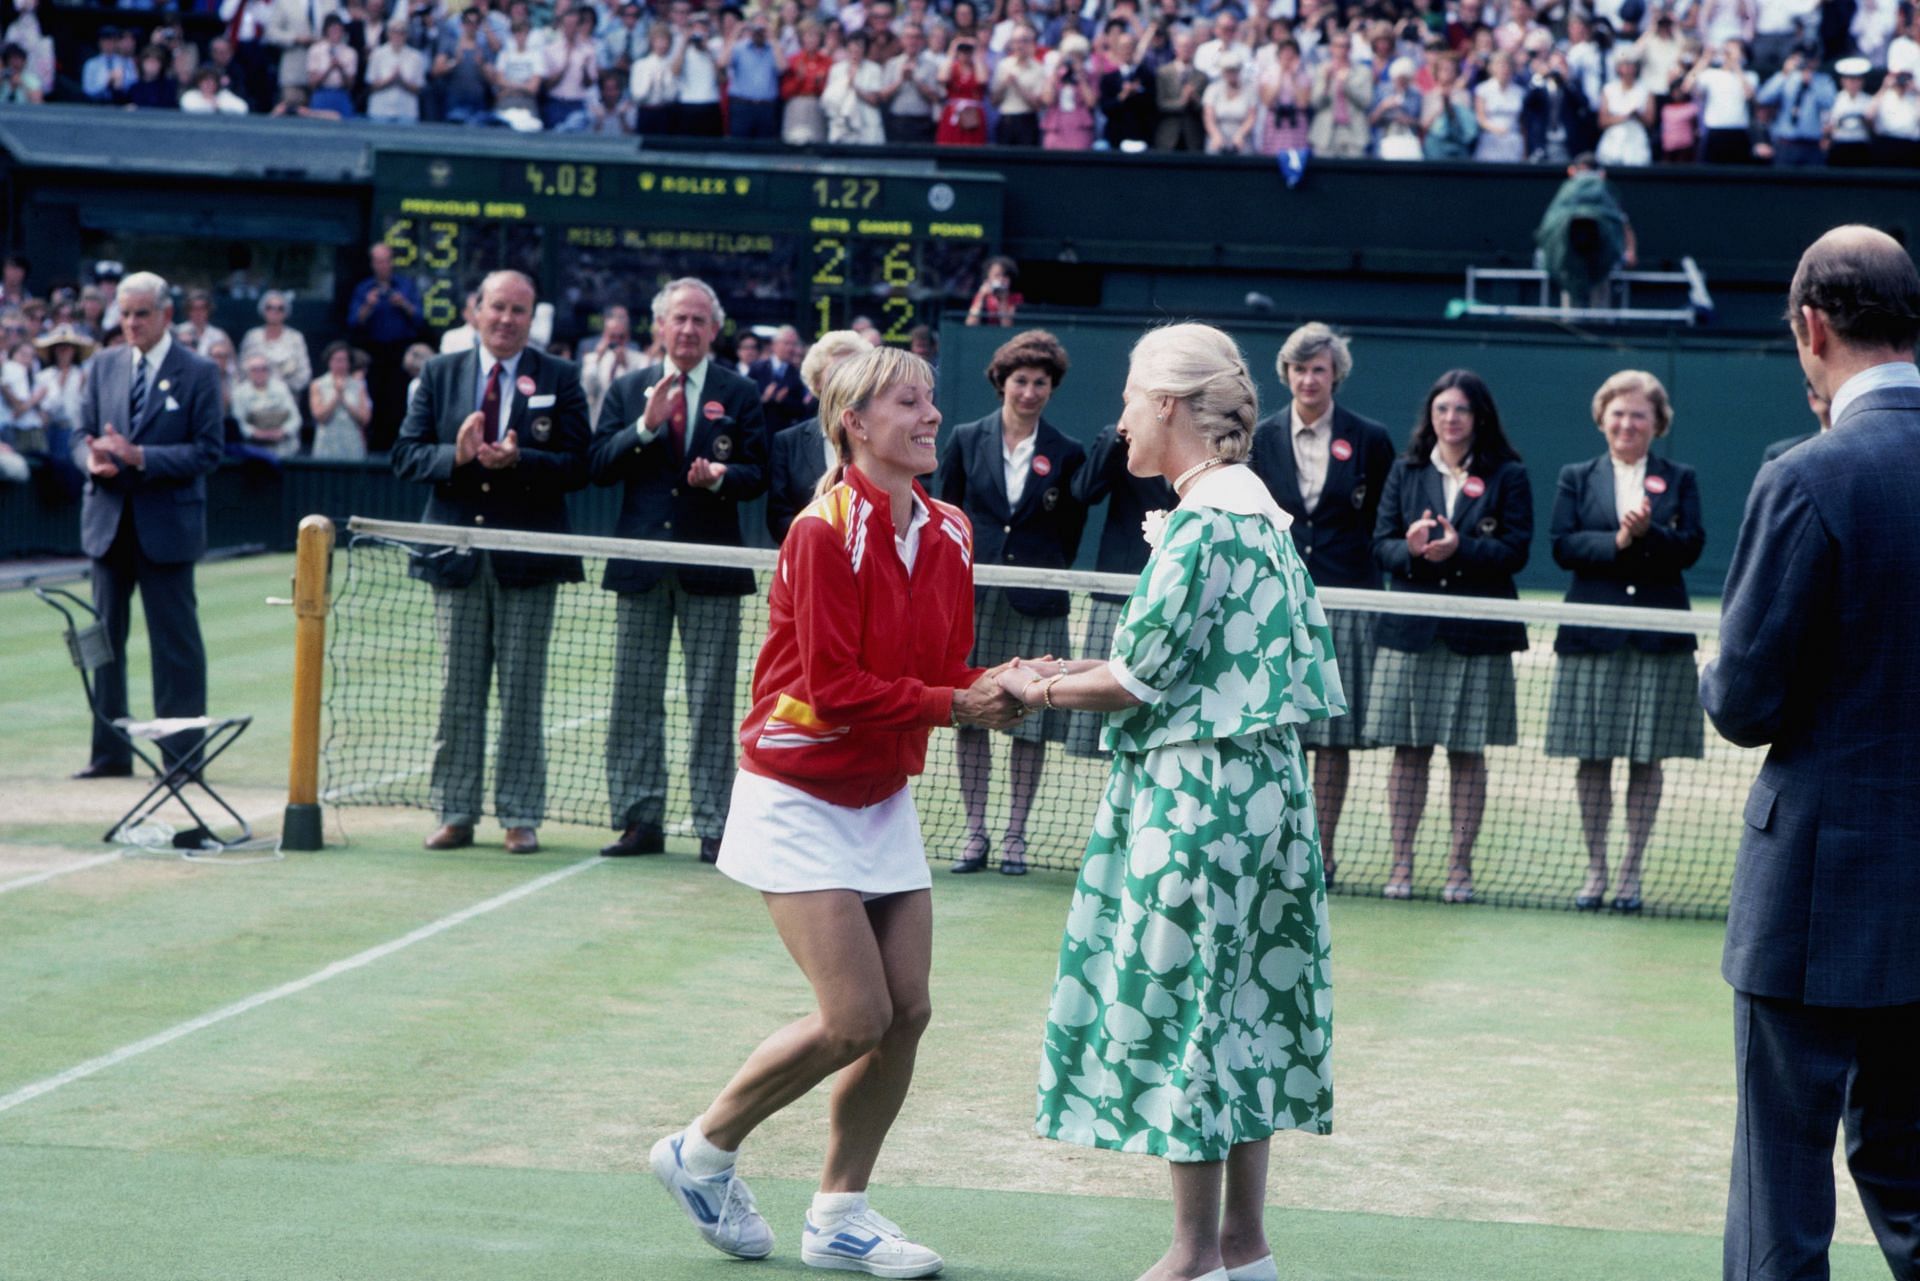 Martina Navratilova received the Venus Rosewater Dish after winning the Wimbledon Lawn Tennis Championships in 1982.